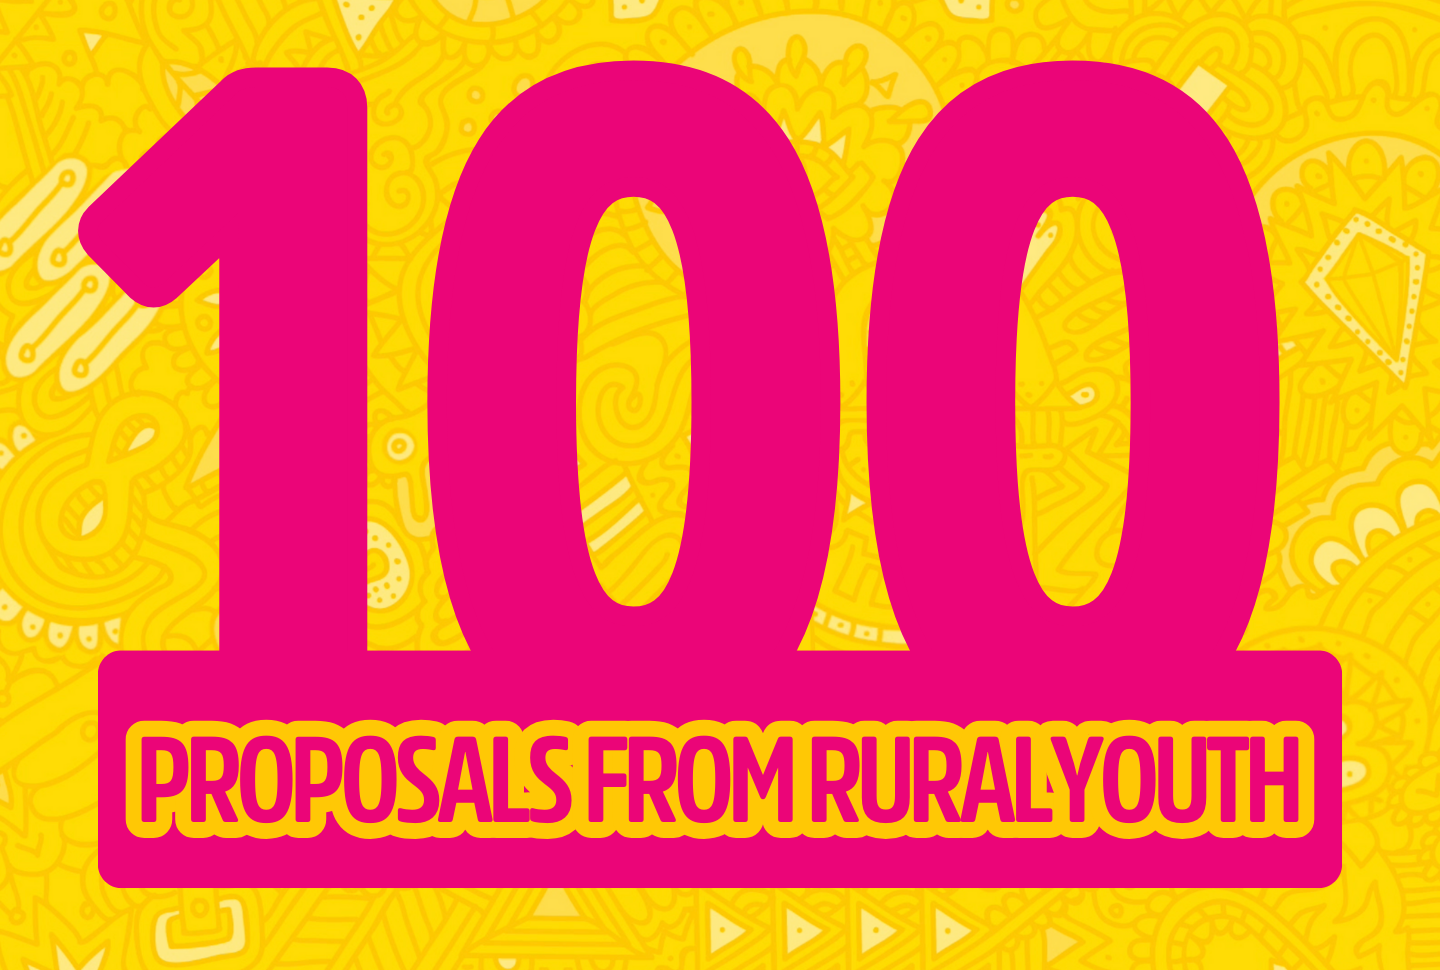 100 proposals rural